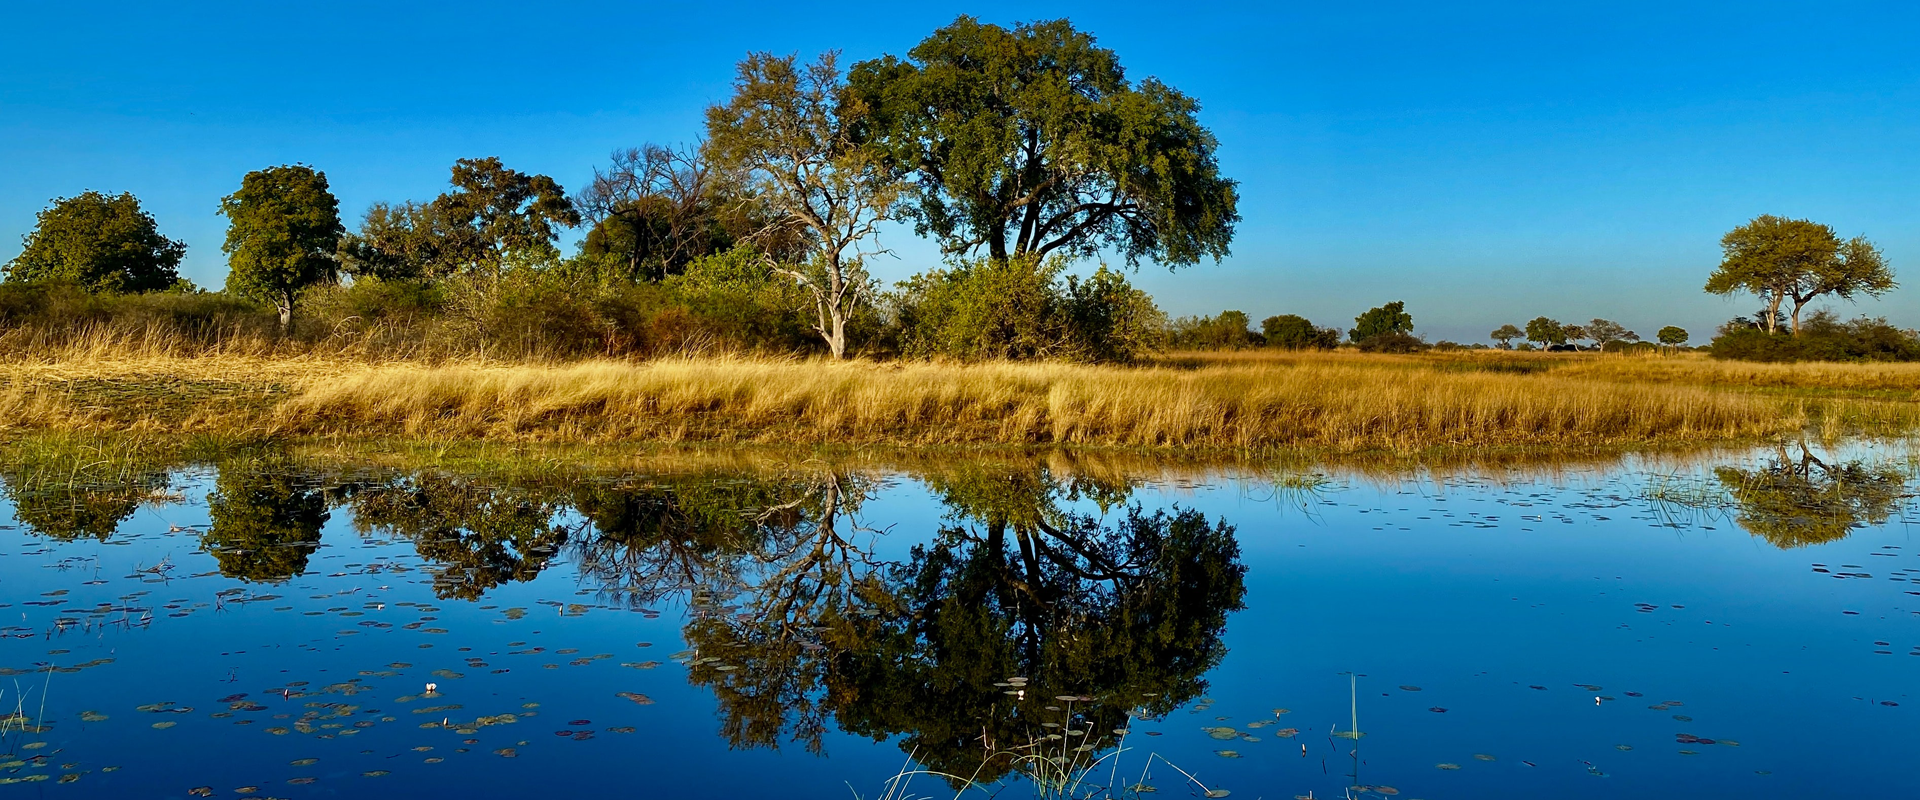 Botswana lodge okavango delta